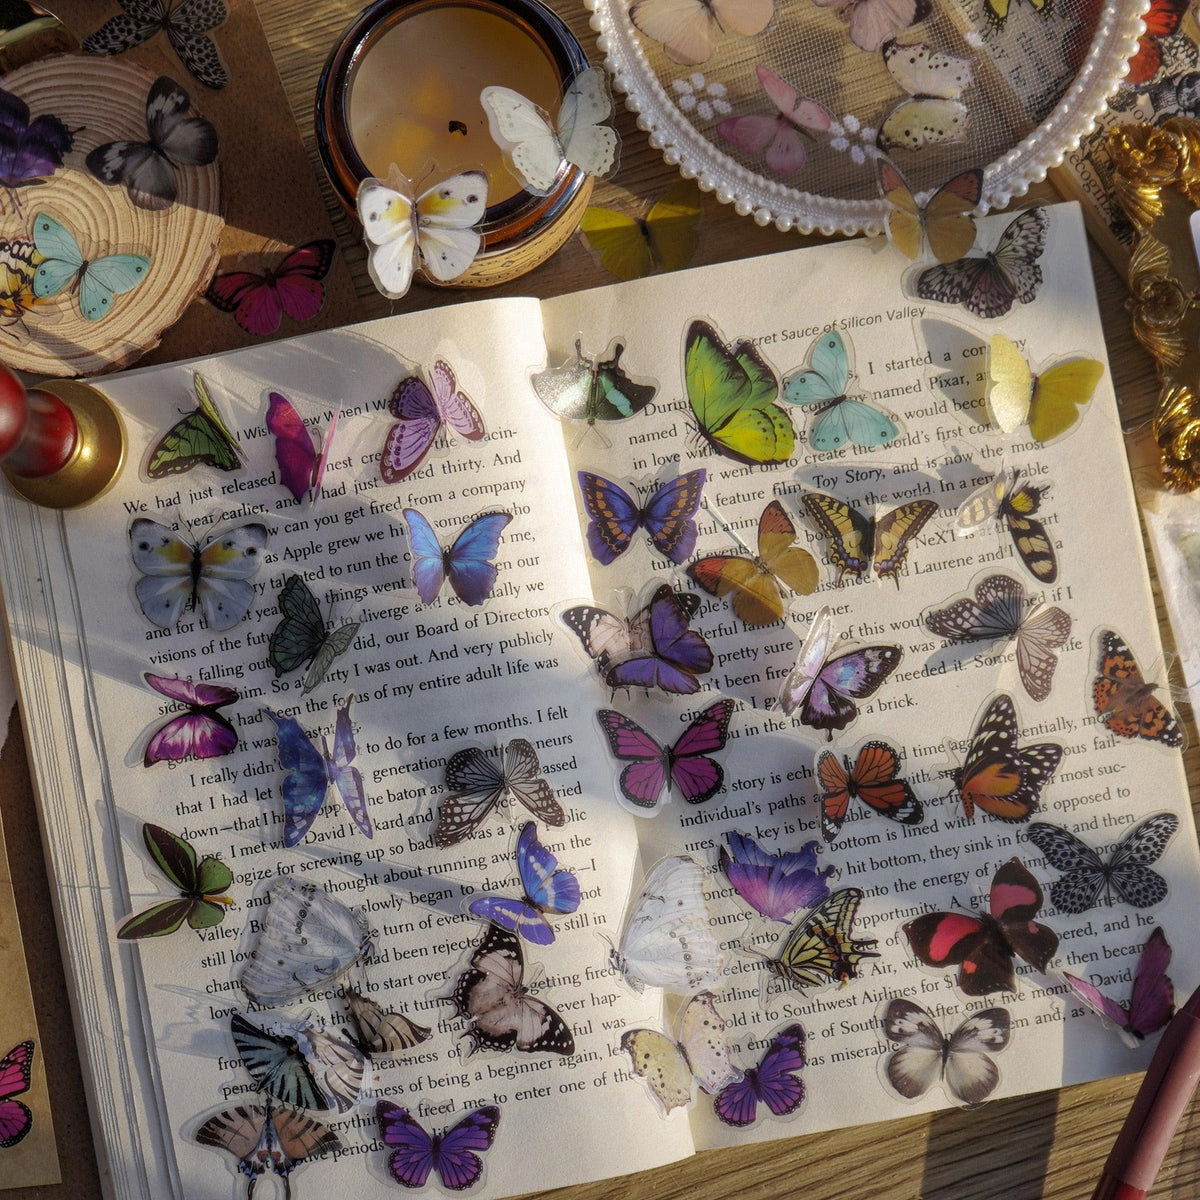 BUKE 40 Pcs Elegant Butterfly Stickers PET Transparent Decorative Decals For Phone Laptop Waterbottle Planner Diary Journal Scrapbook - bukenotebook